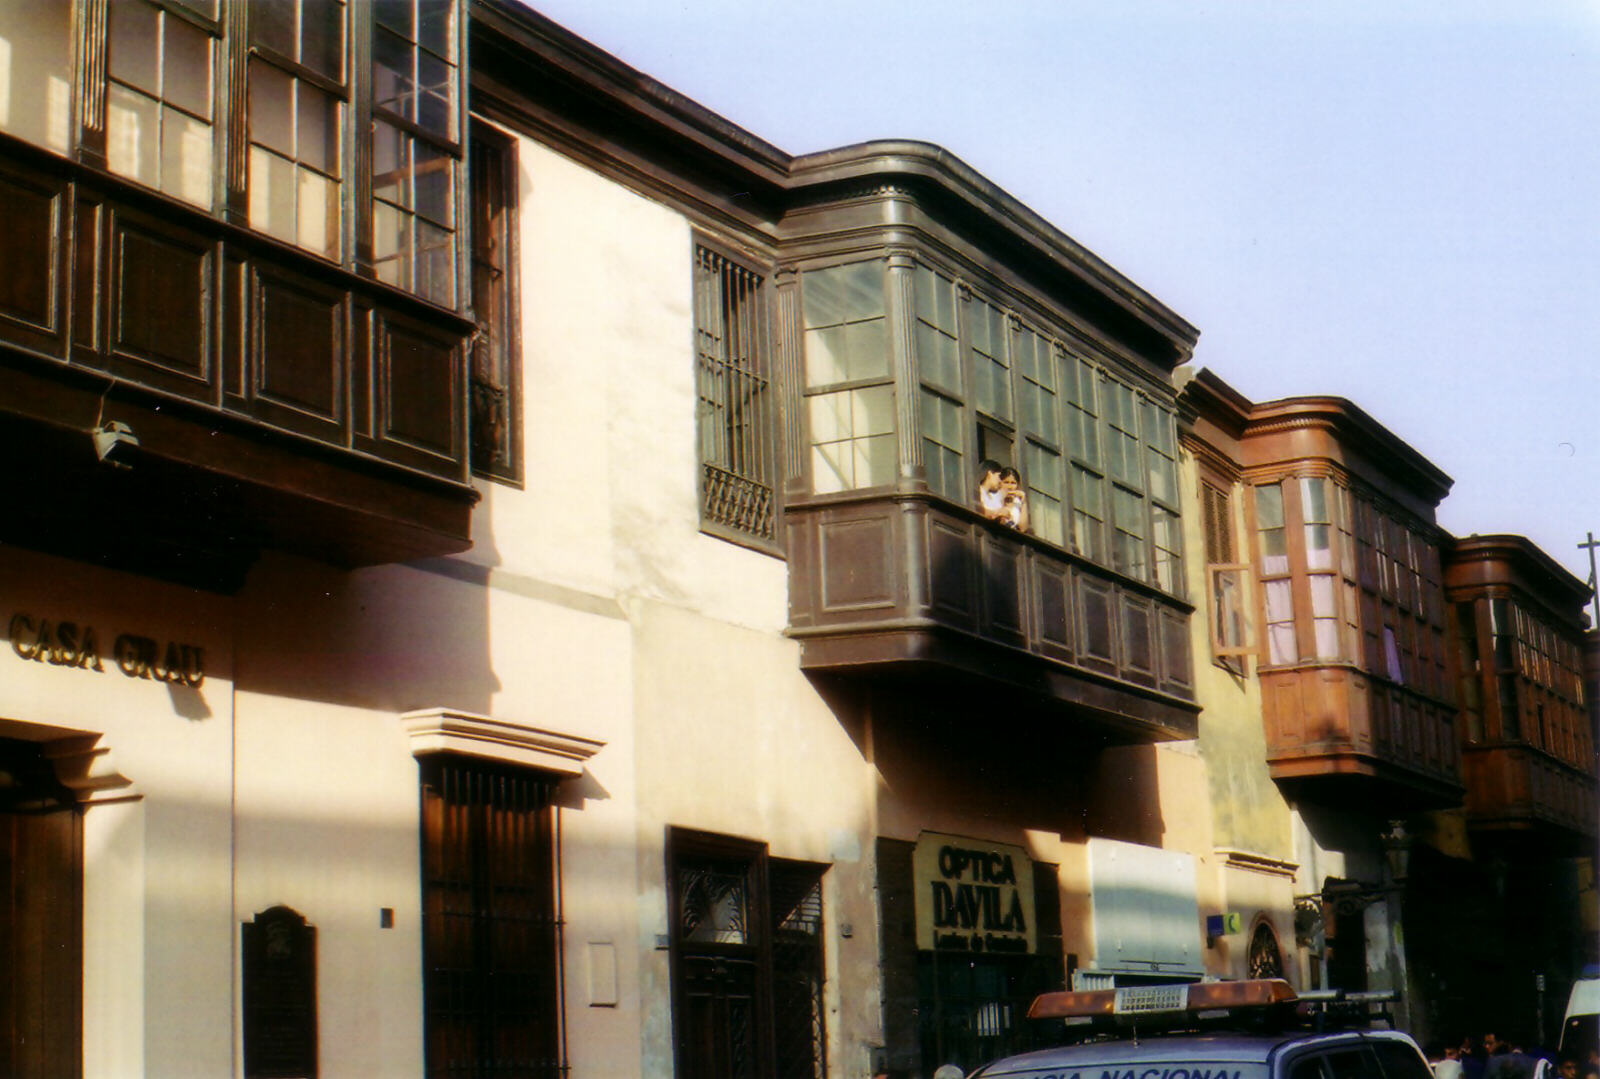 Balconied houses on Ica Street, Lima, Peru